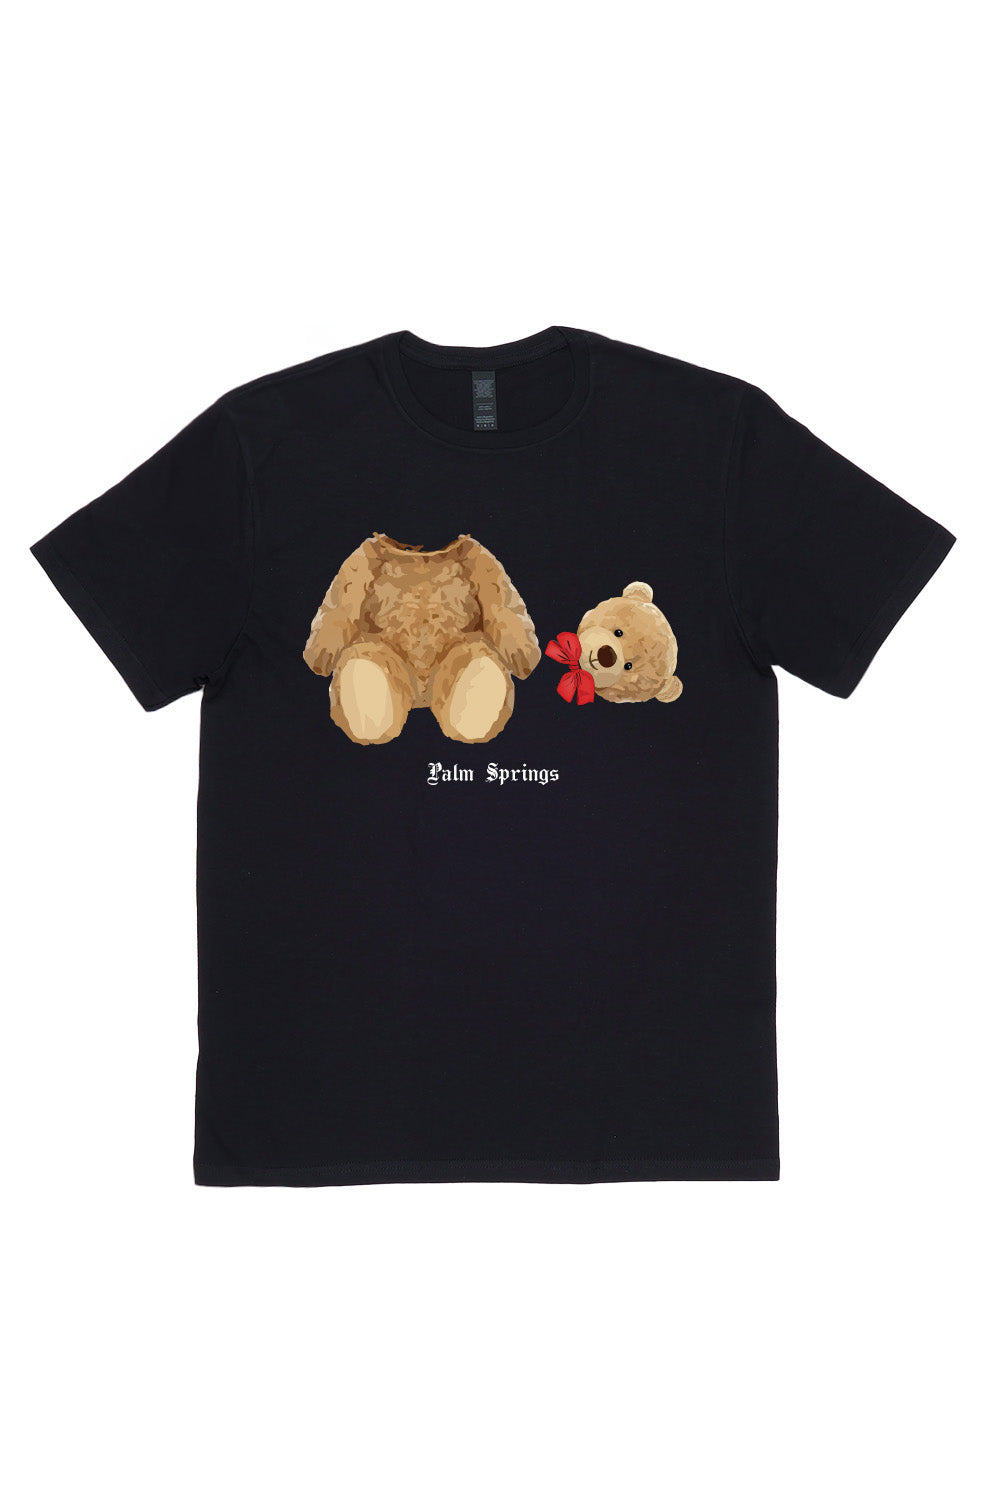 Palm Springs Teddy T-Shirt in Black (Custom Packs)